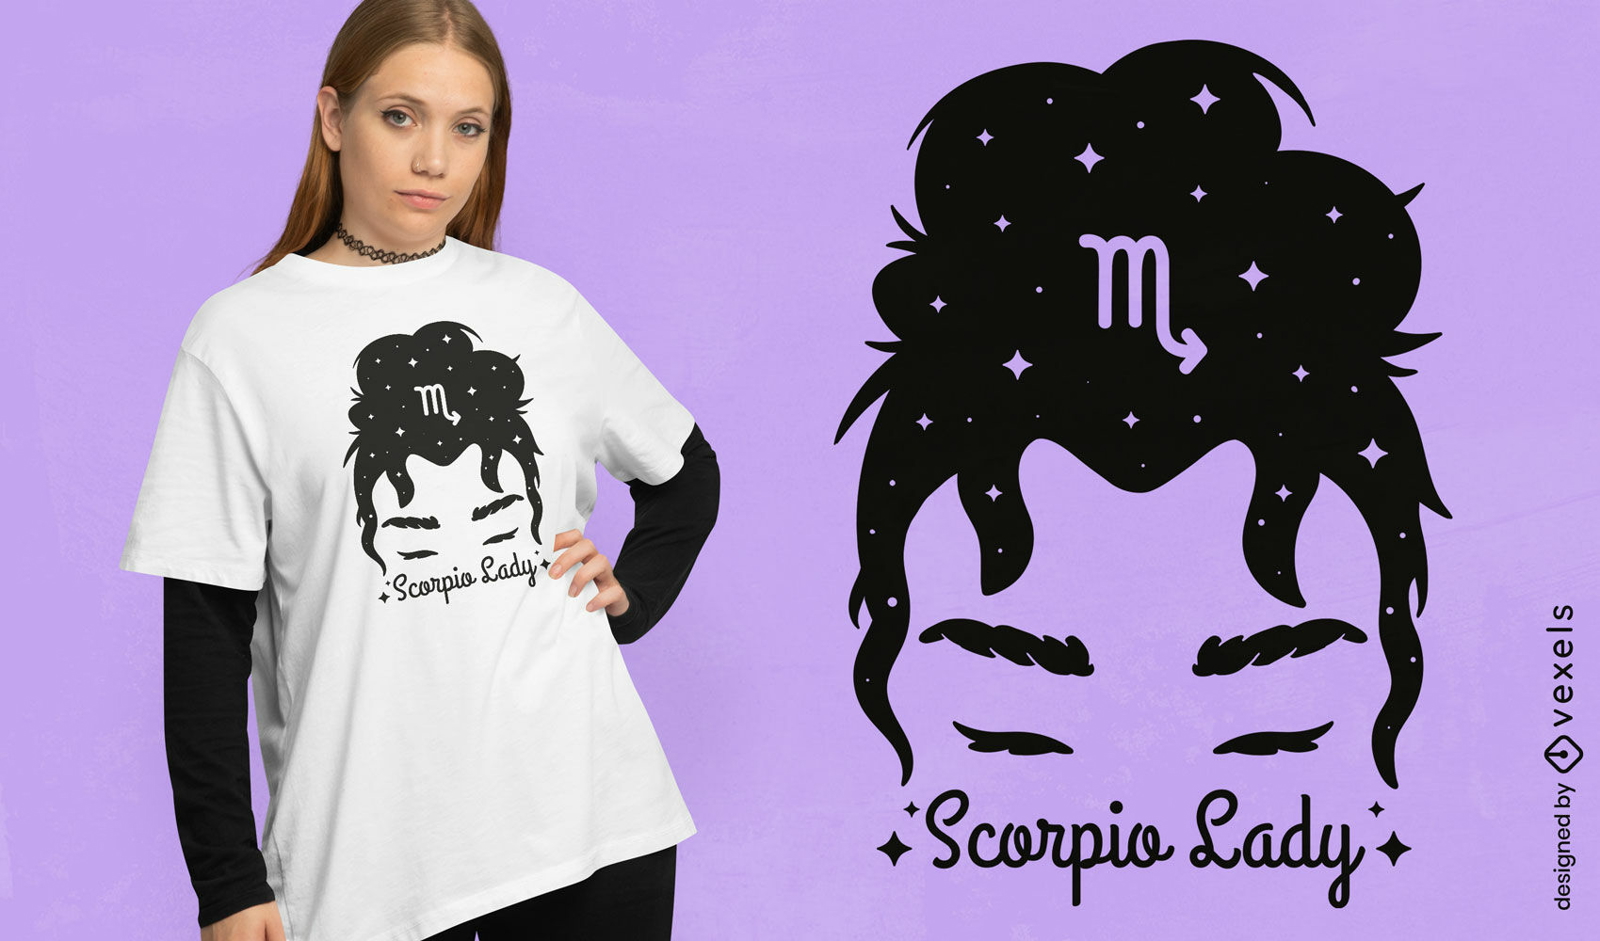 Scorpio lady t-shirt design